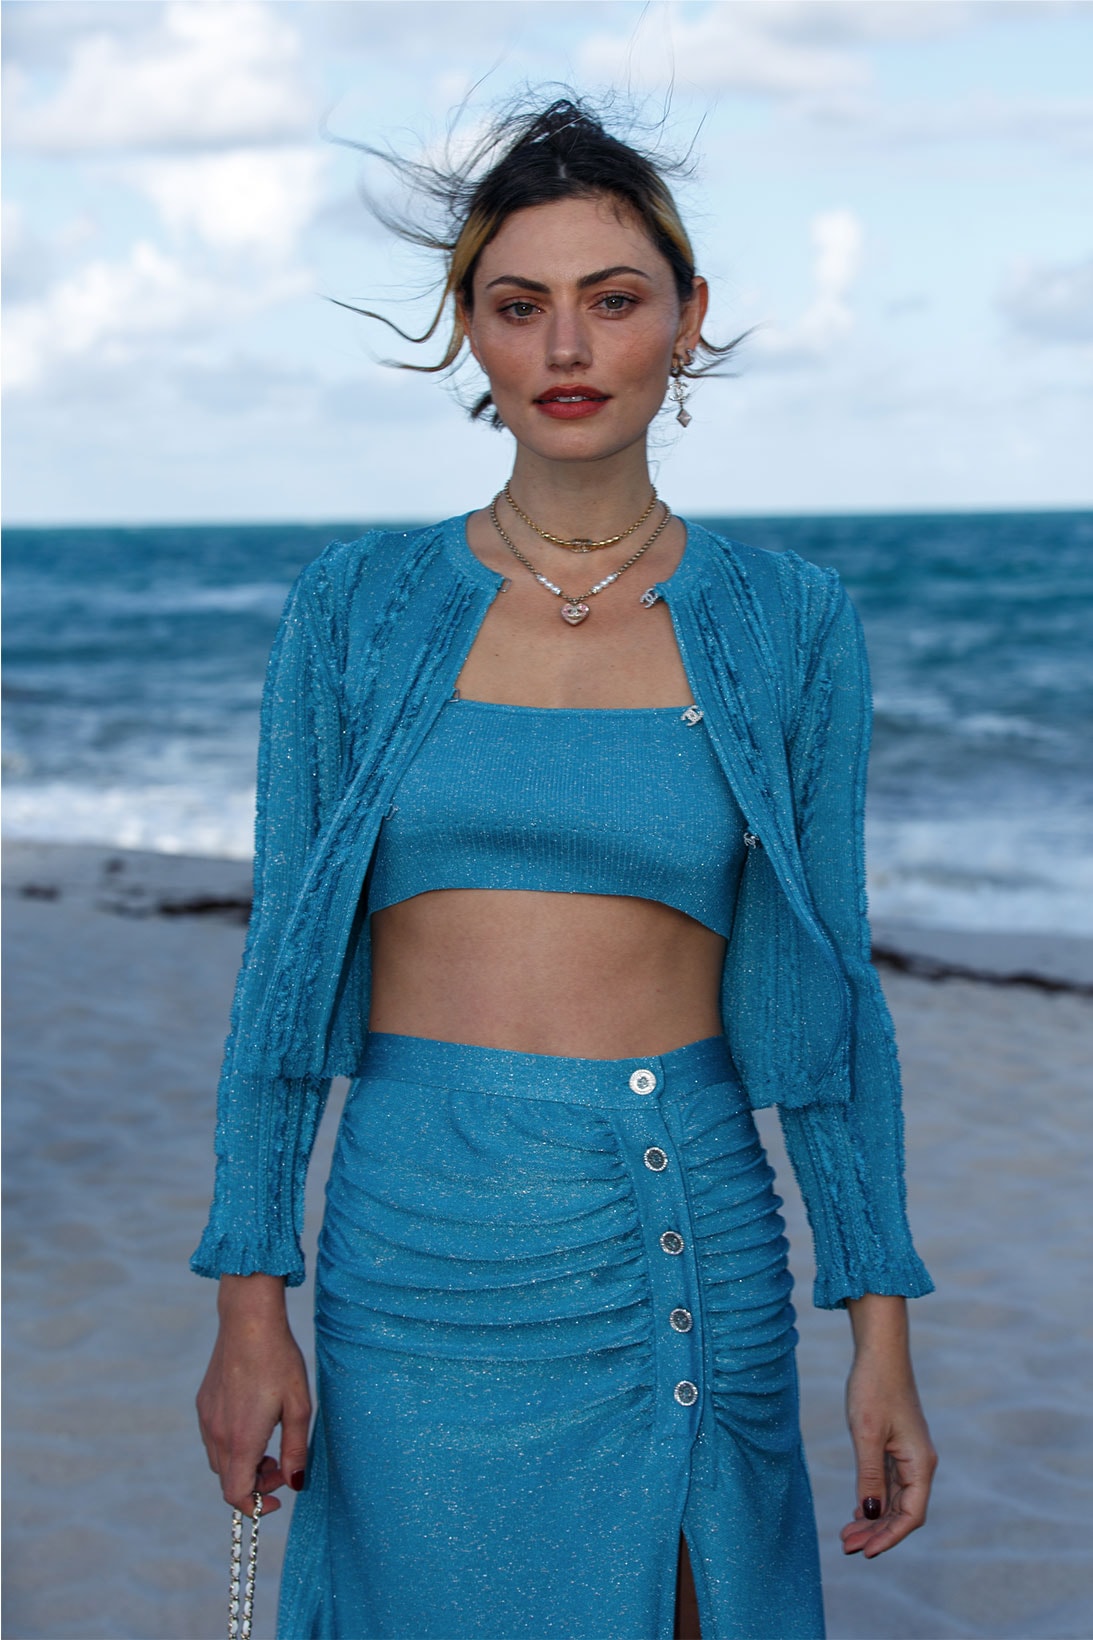 Chanel Cruise Show Miami Best Dressed Celebrities Lily Rose Depp Arden Cho Ella Balinska Images